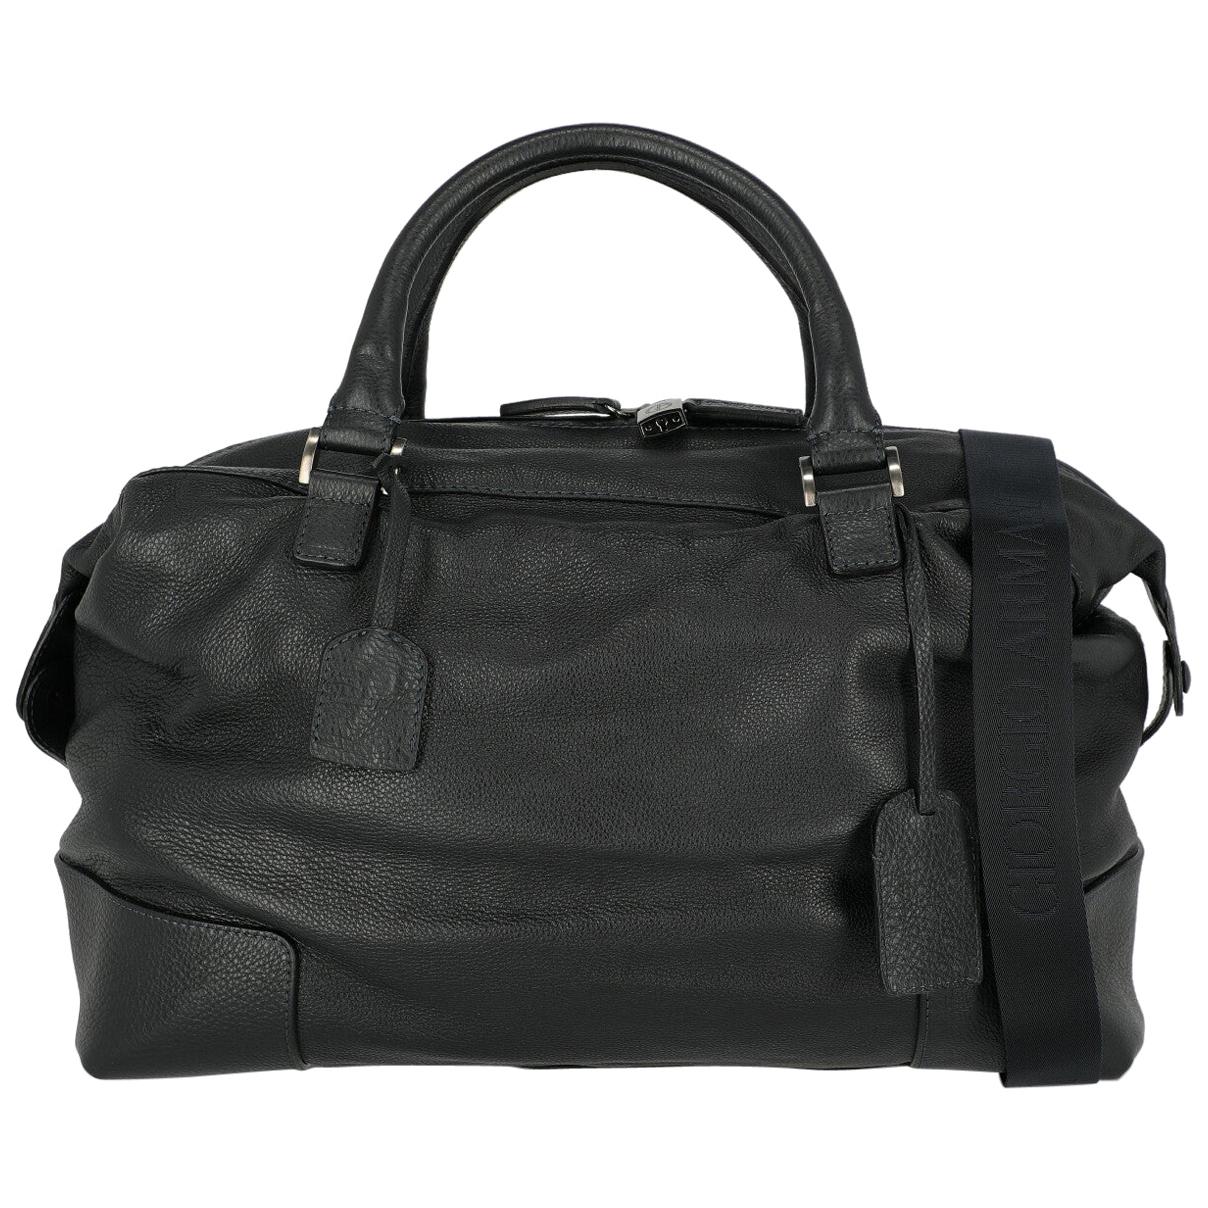 Giorgio Armani Woman Travel bag Navy Leather For Sale